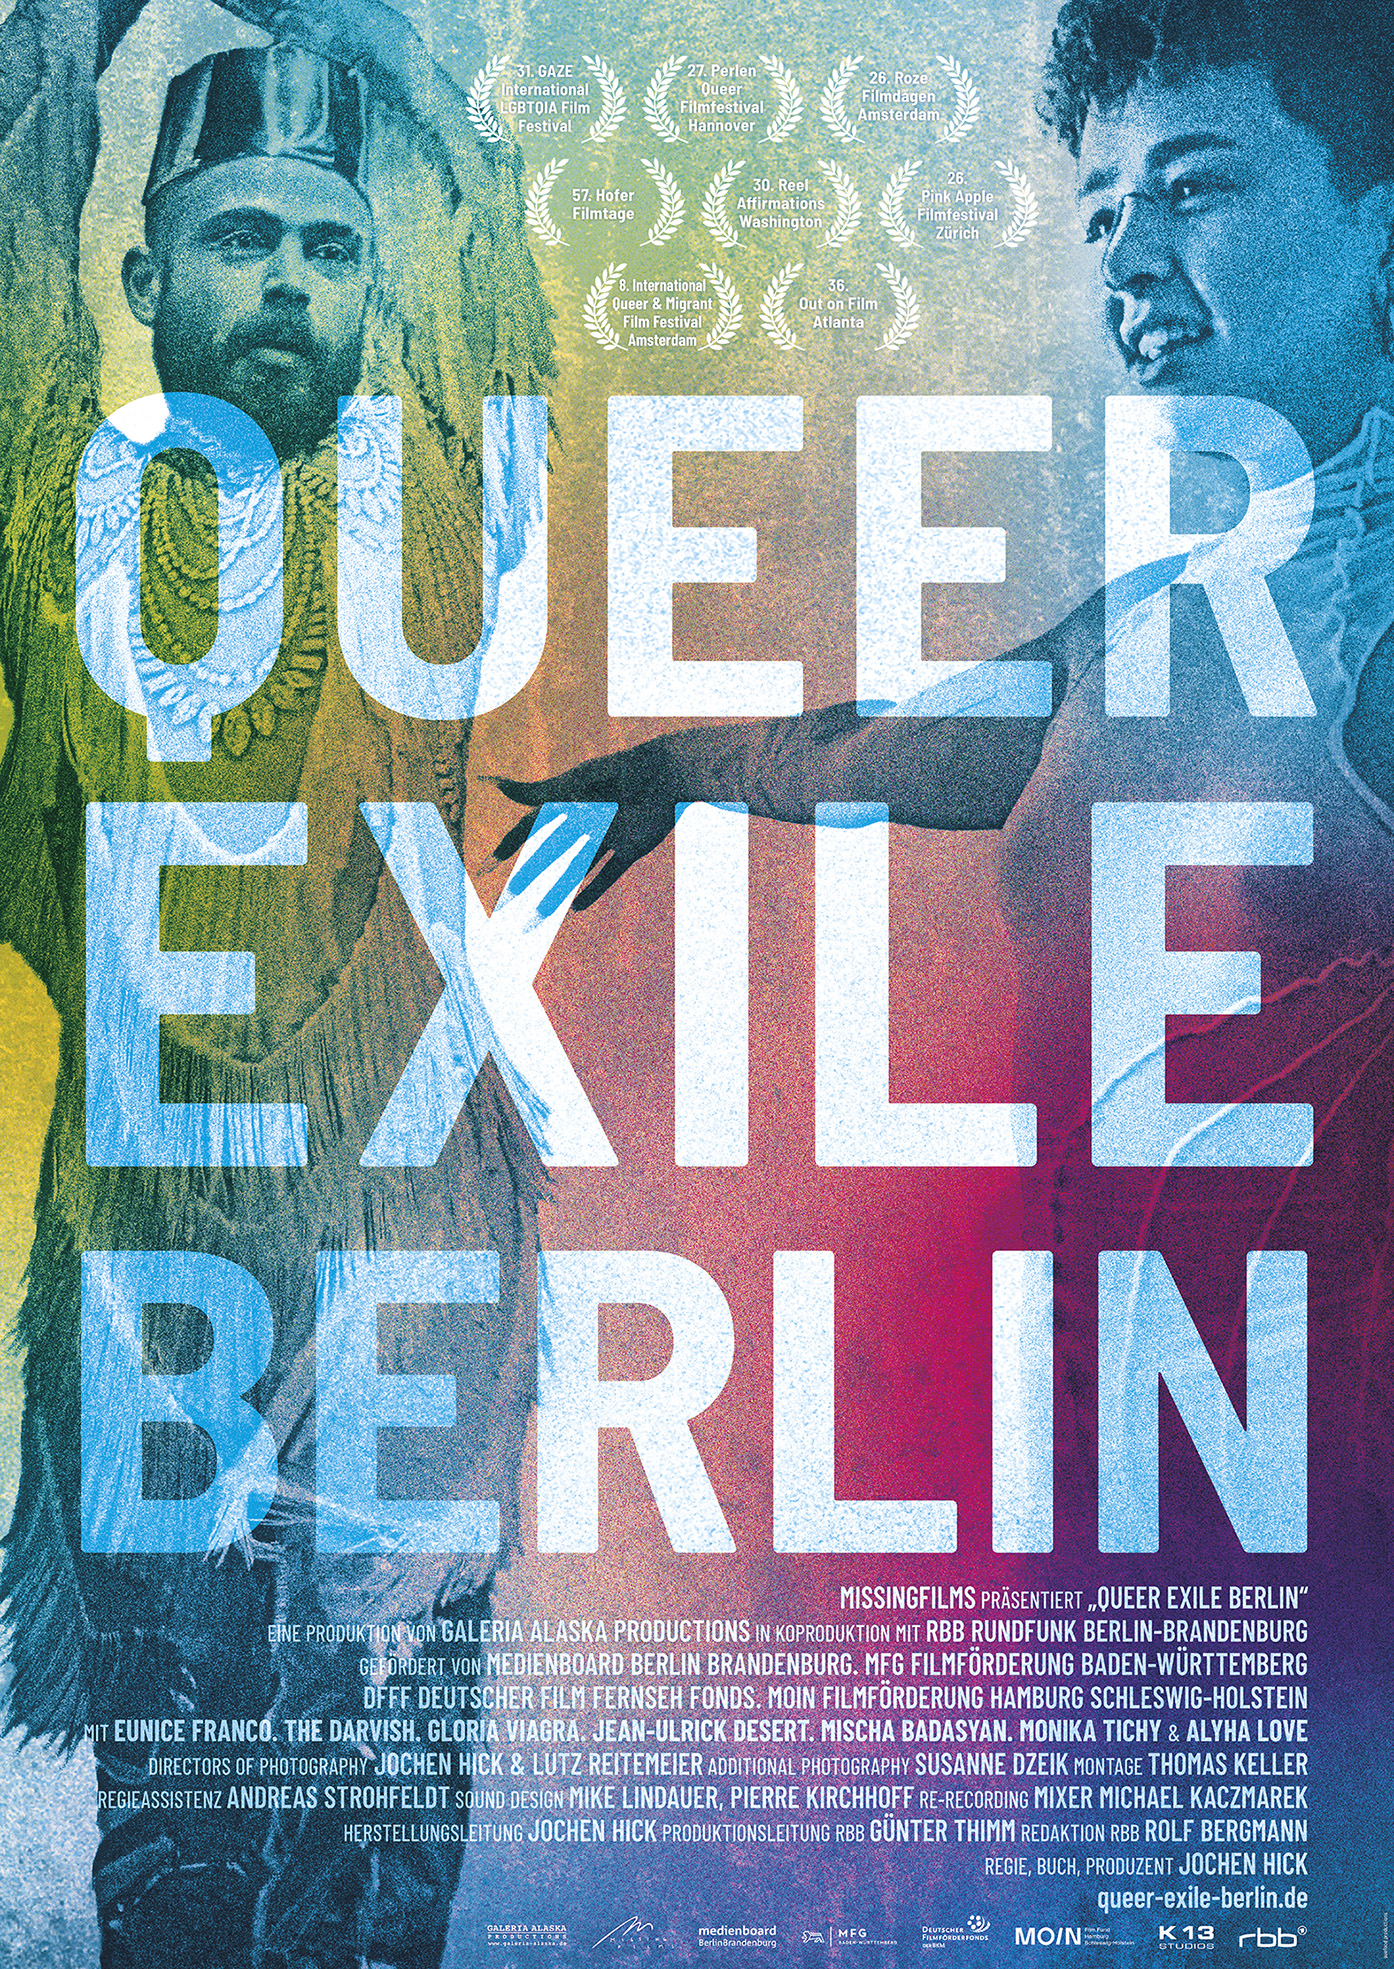 Queer Exile Berlin – by Jochen Hick